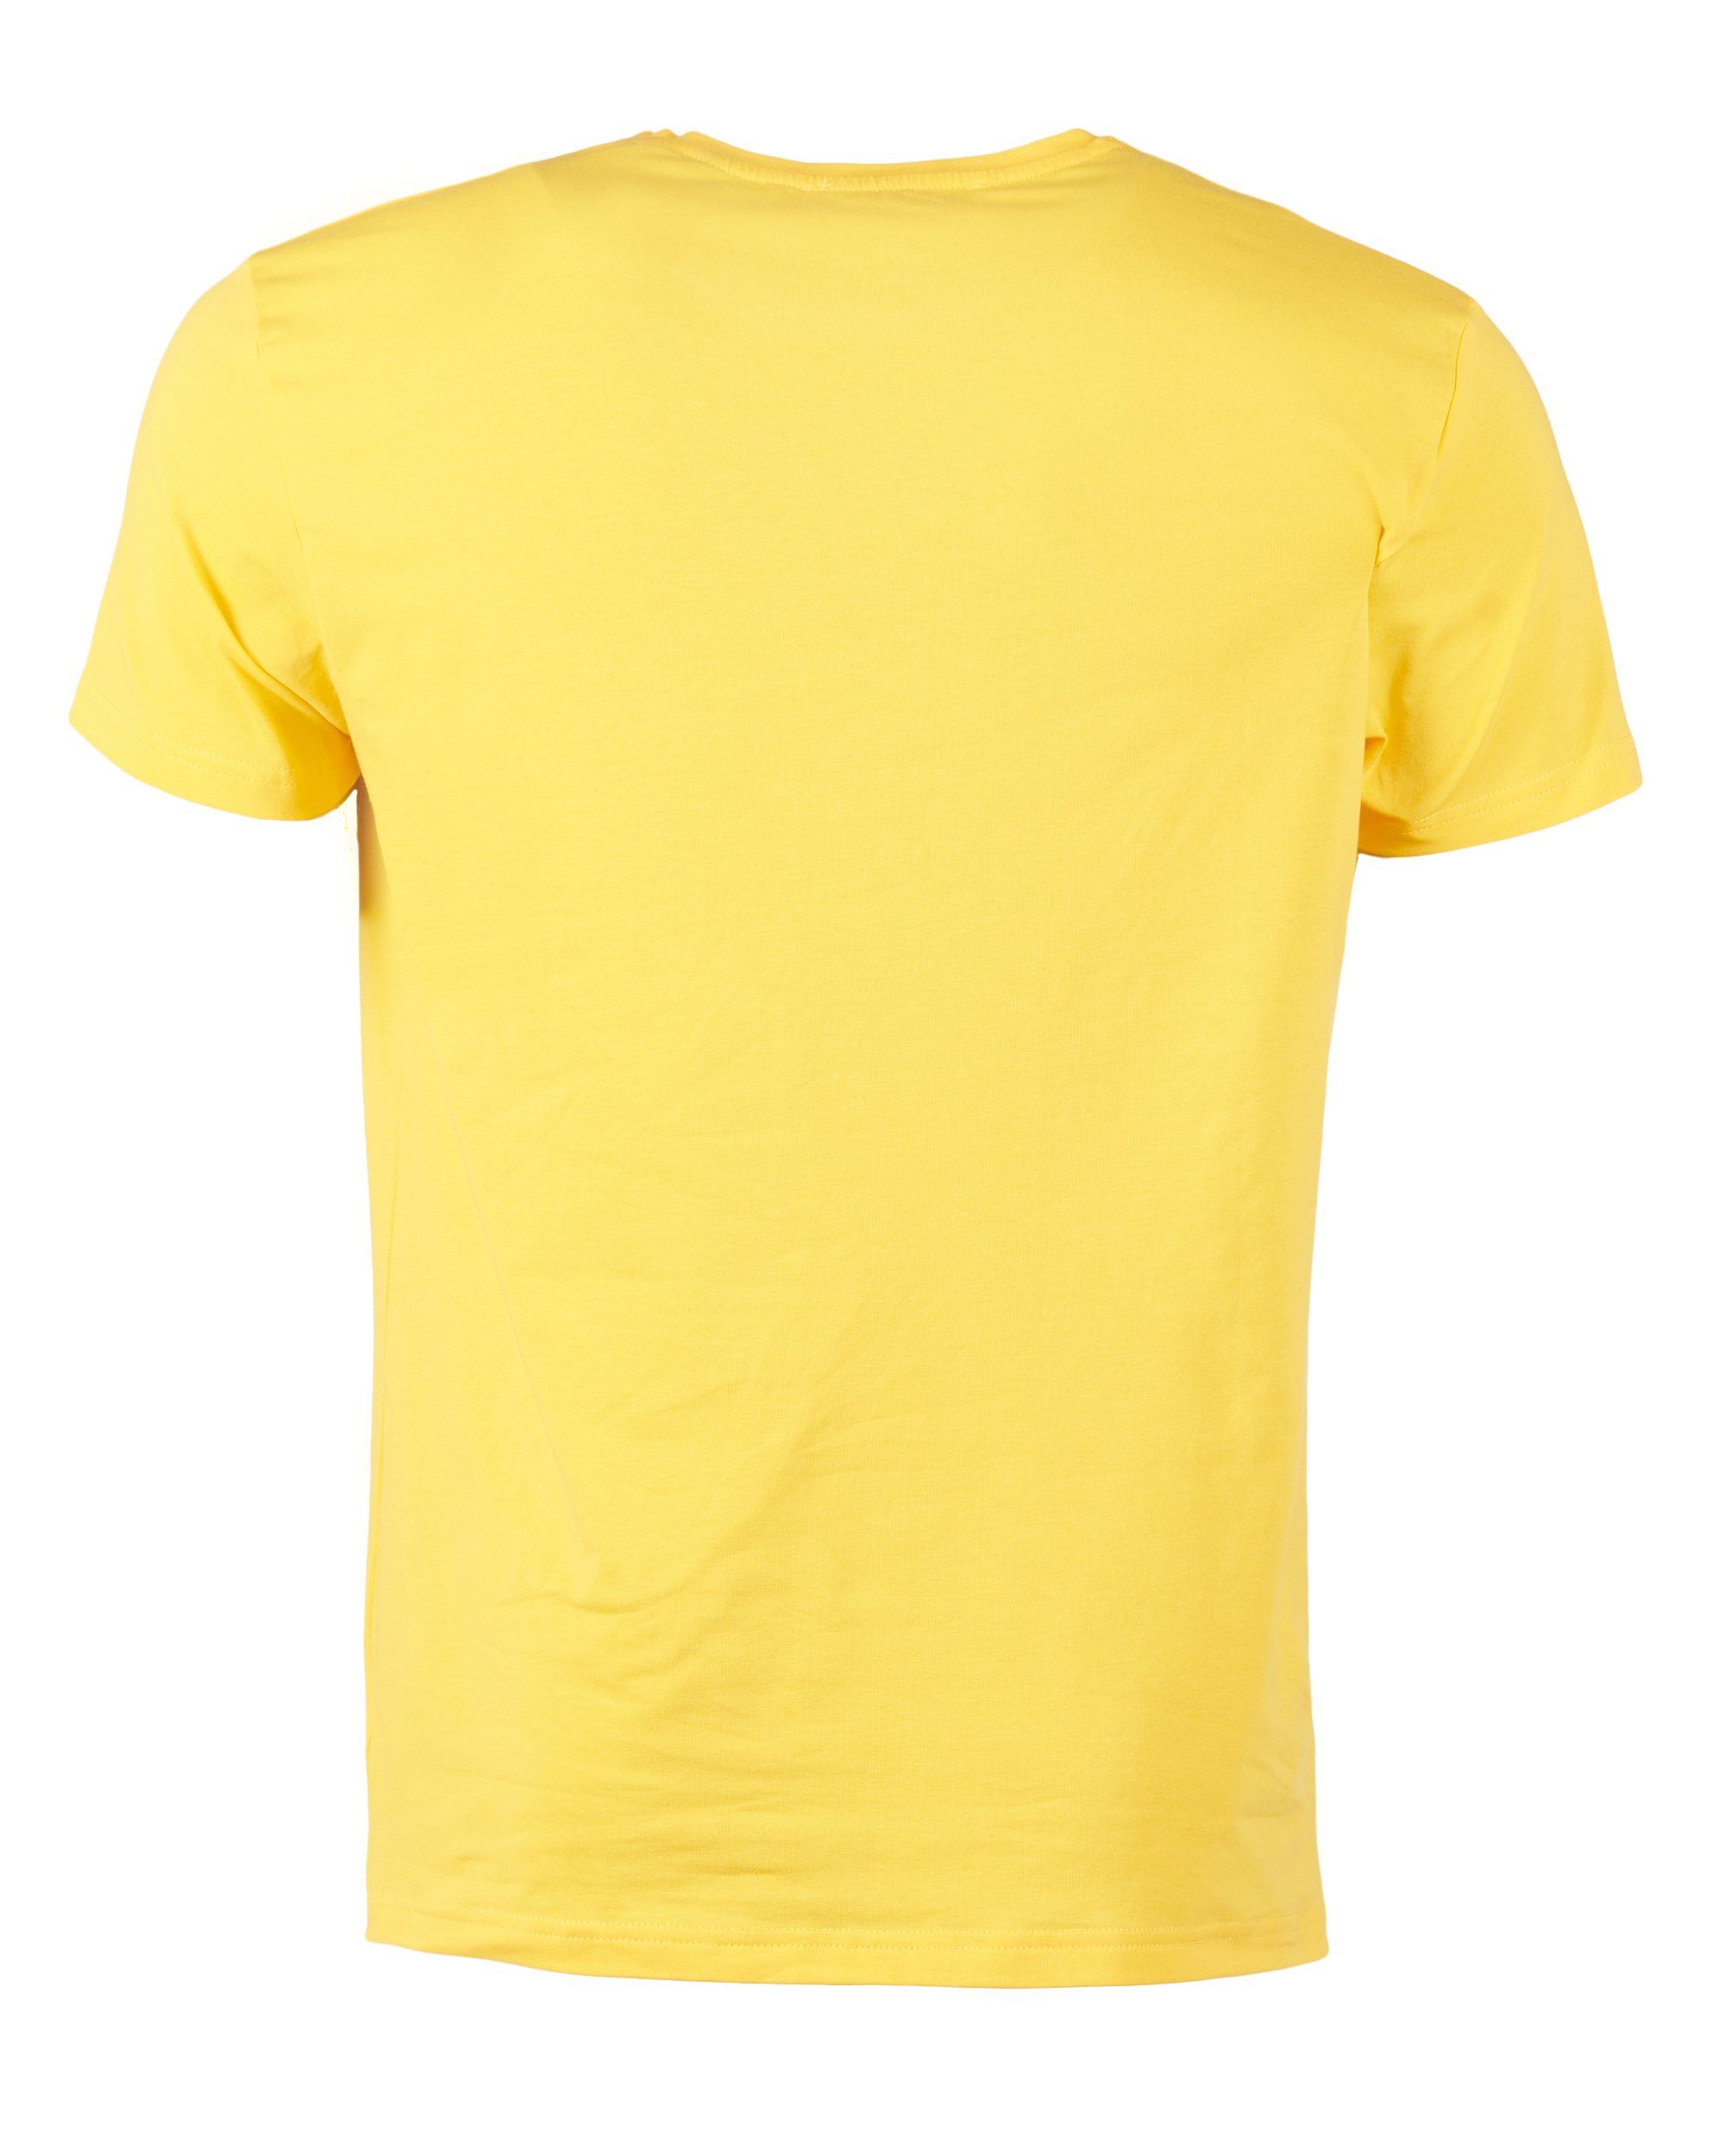 TG20193018 GUN TOP yellow Bling T-Shirt